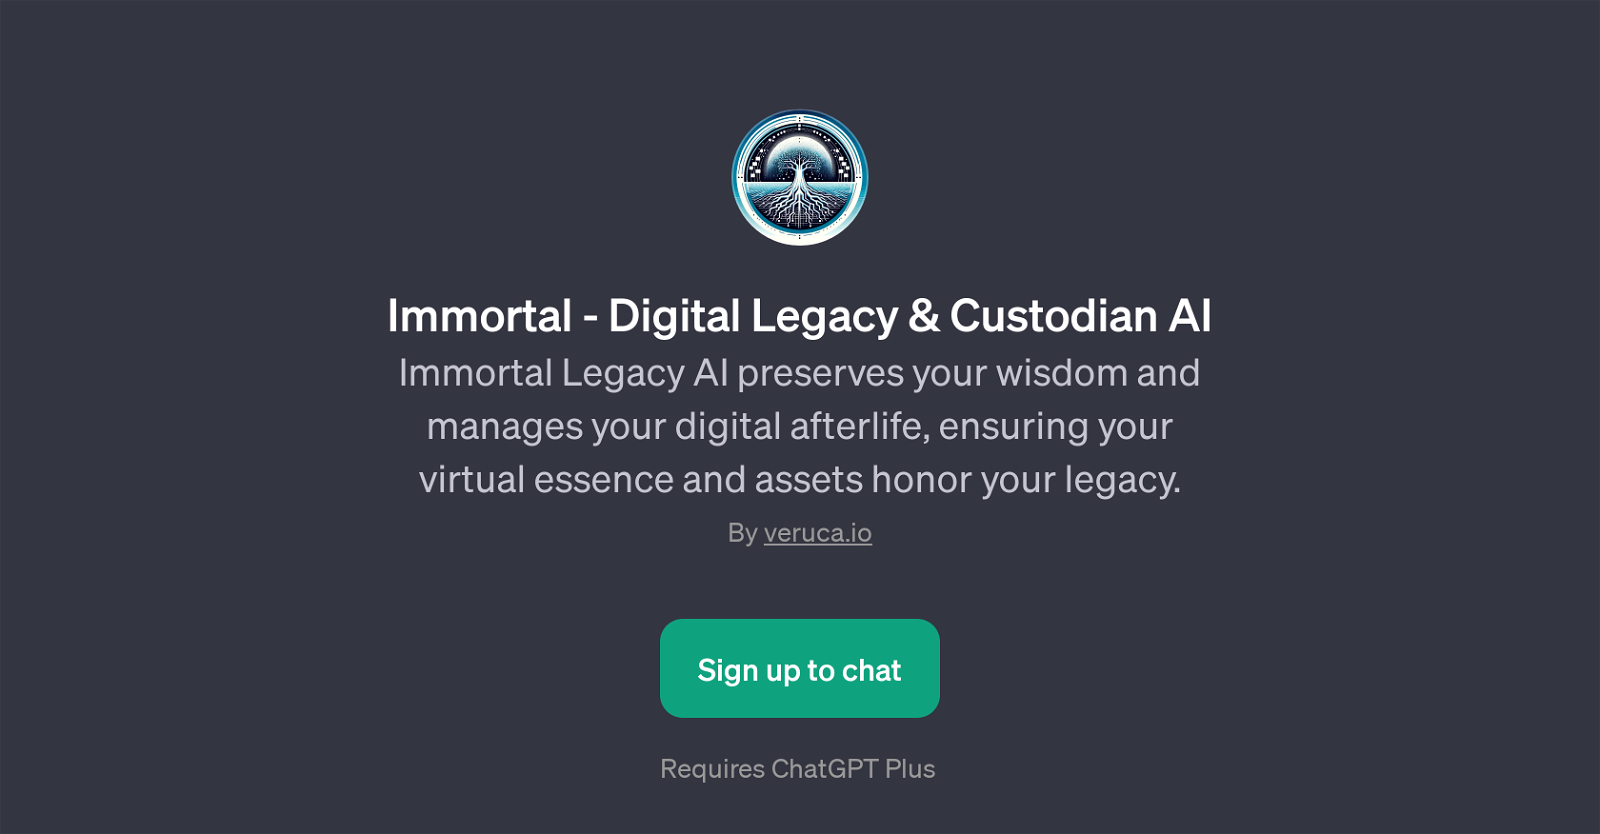 Immortal - Digital Legacy & Custodian AI website